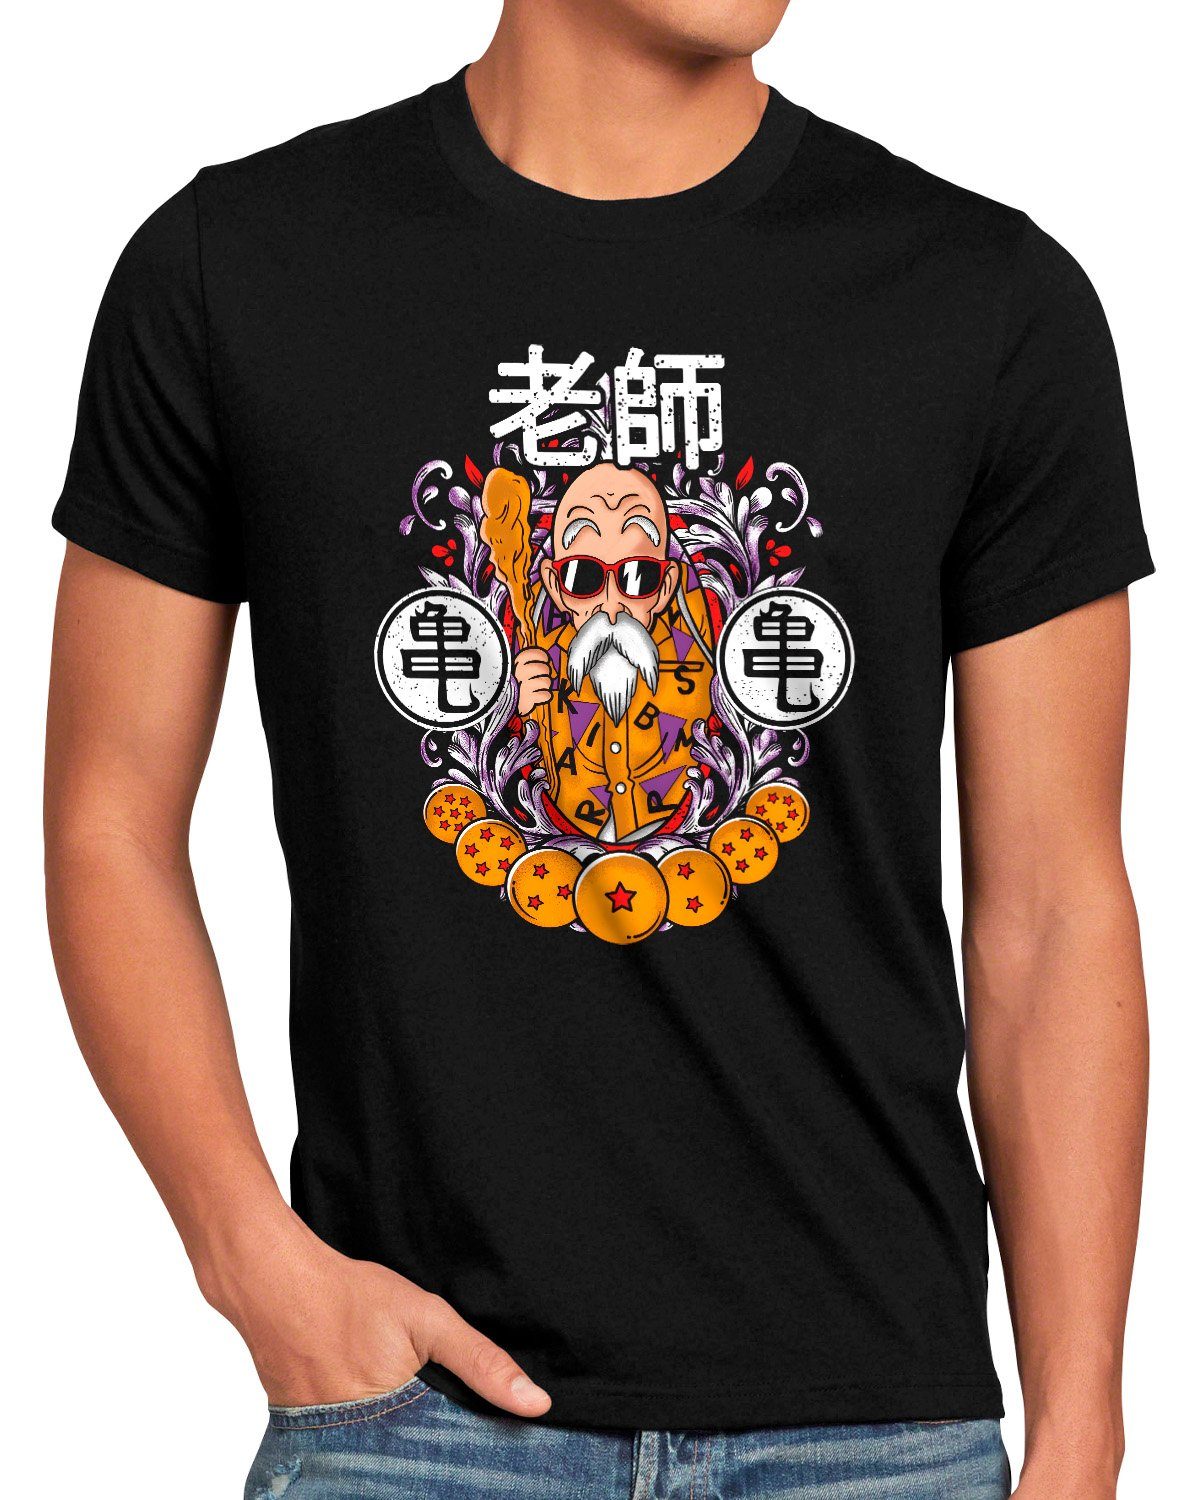 T-Shirt super the Great z breakers Print-Shirt songoku kakarot gt Master Herren style3 dragonball